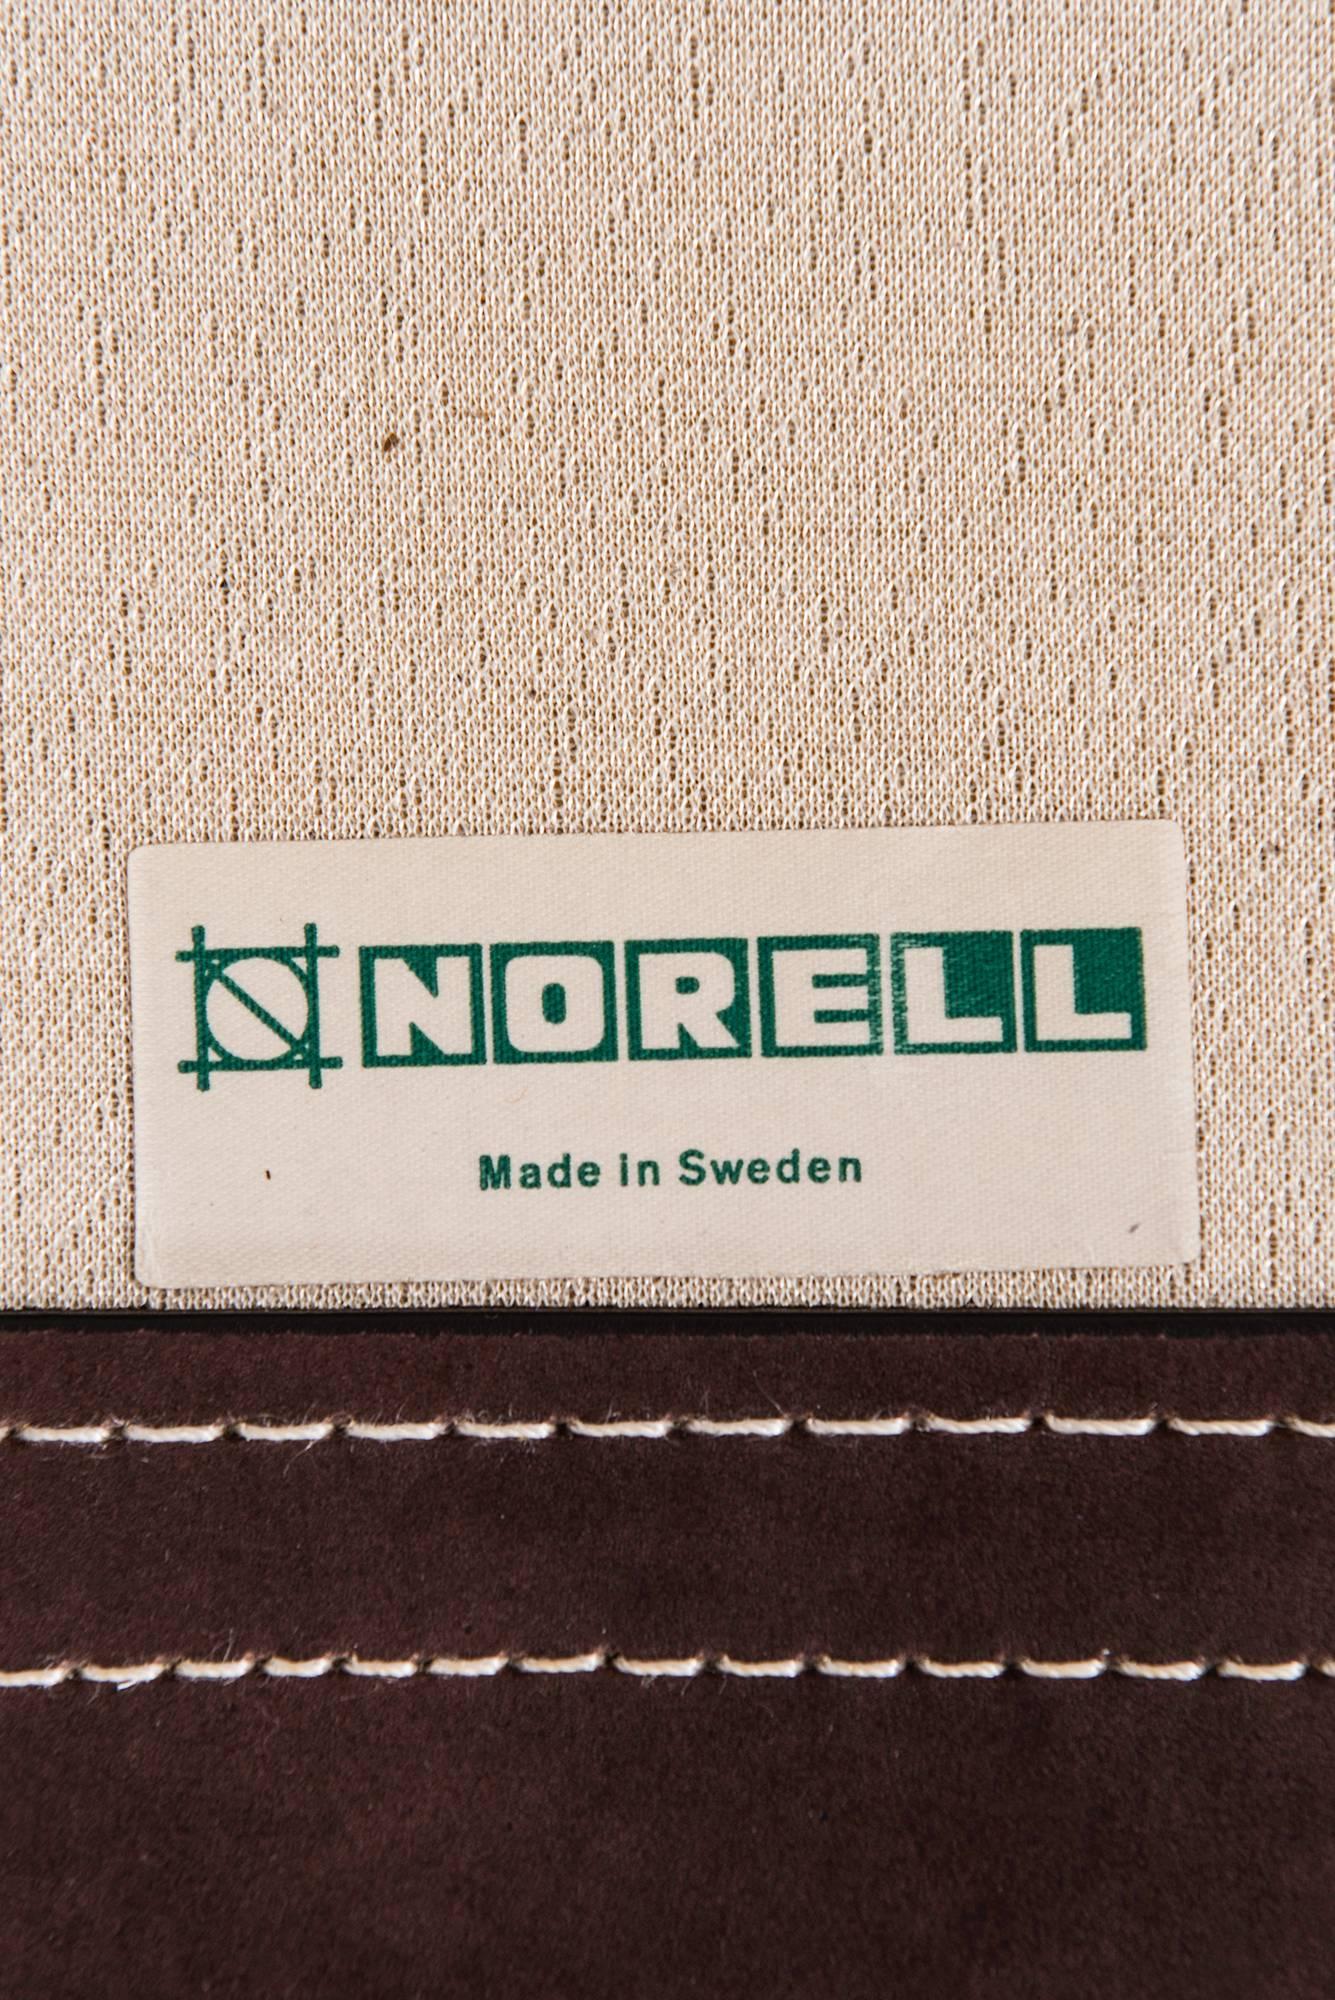 Arne Norell Sofa Model Kontiki by Arne Norell Ab in Sweden 2